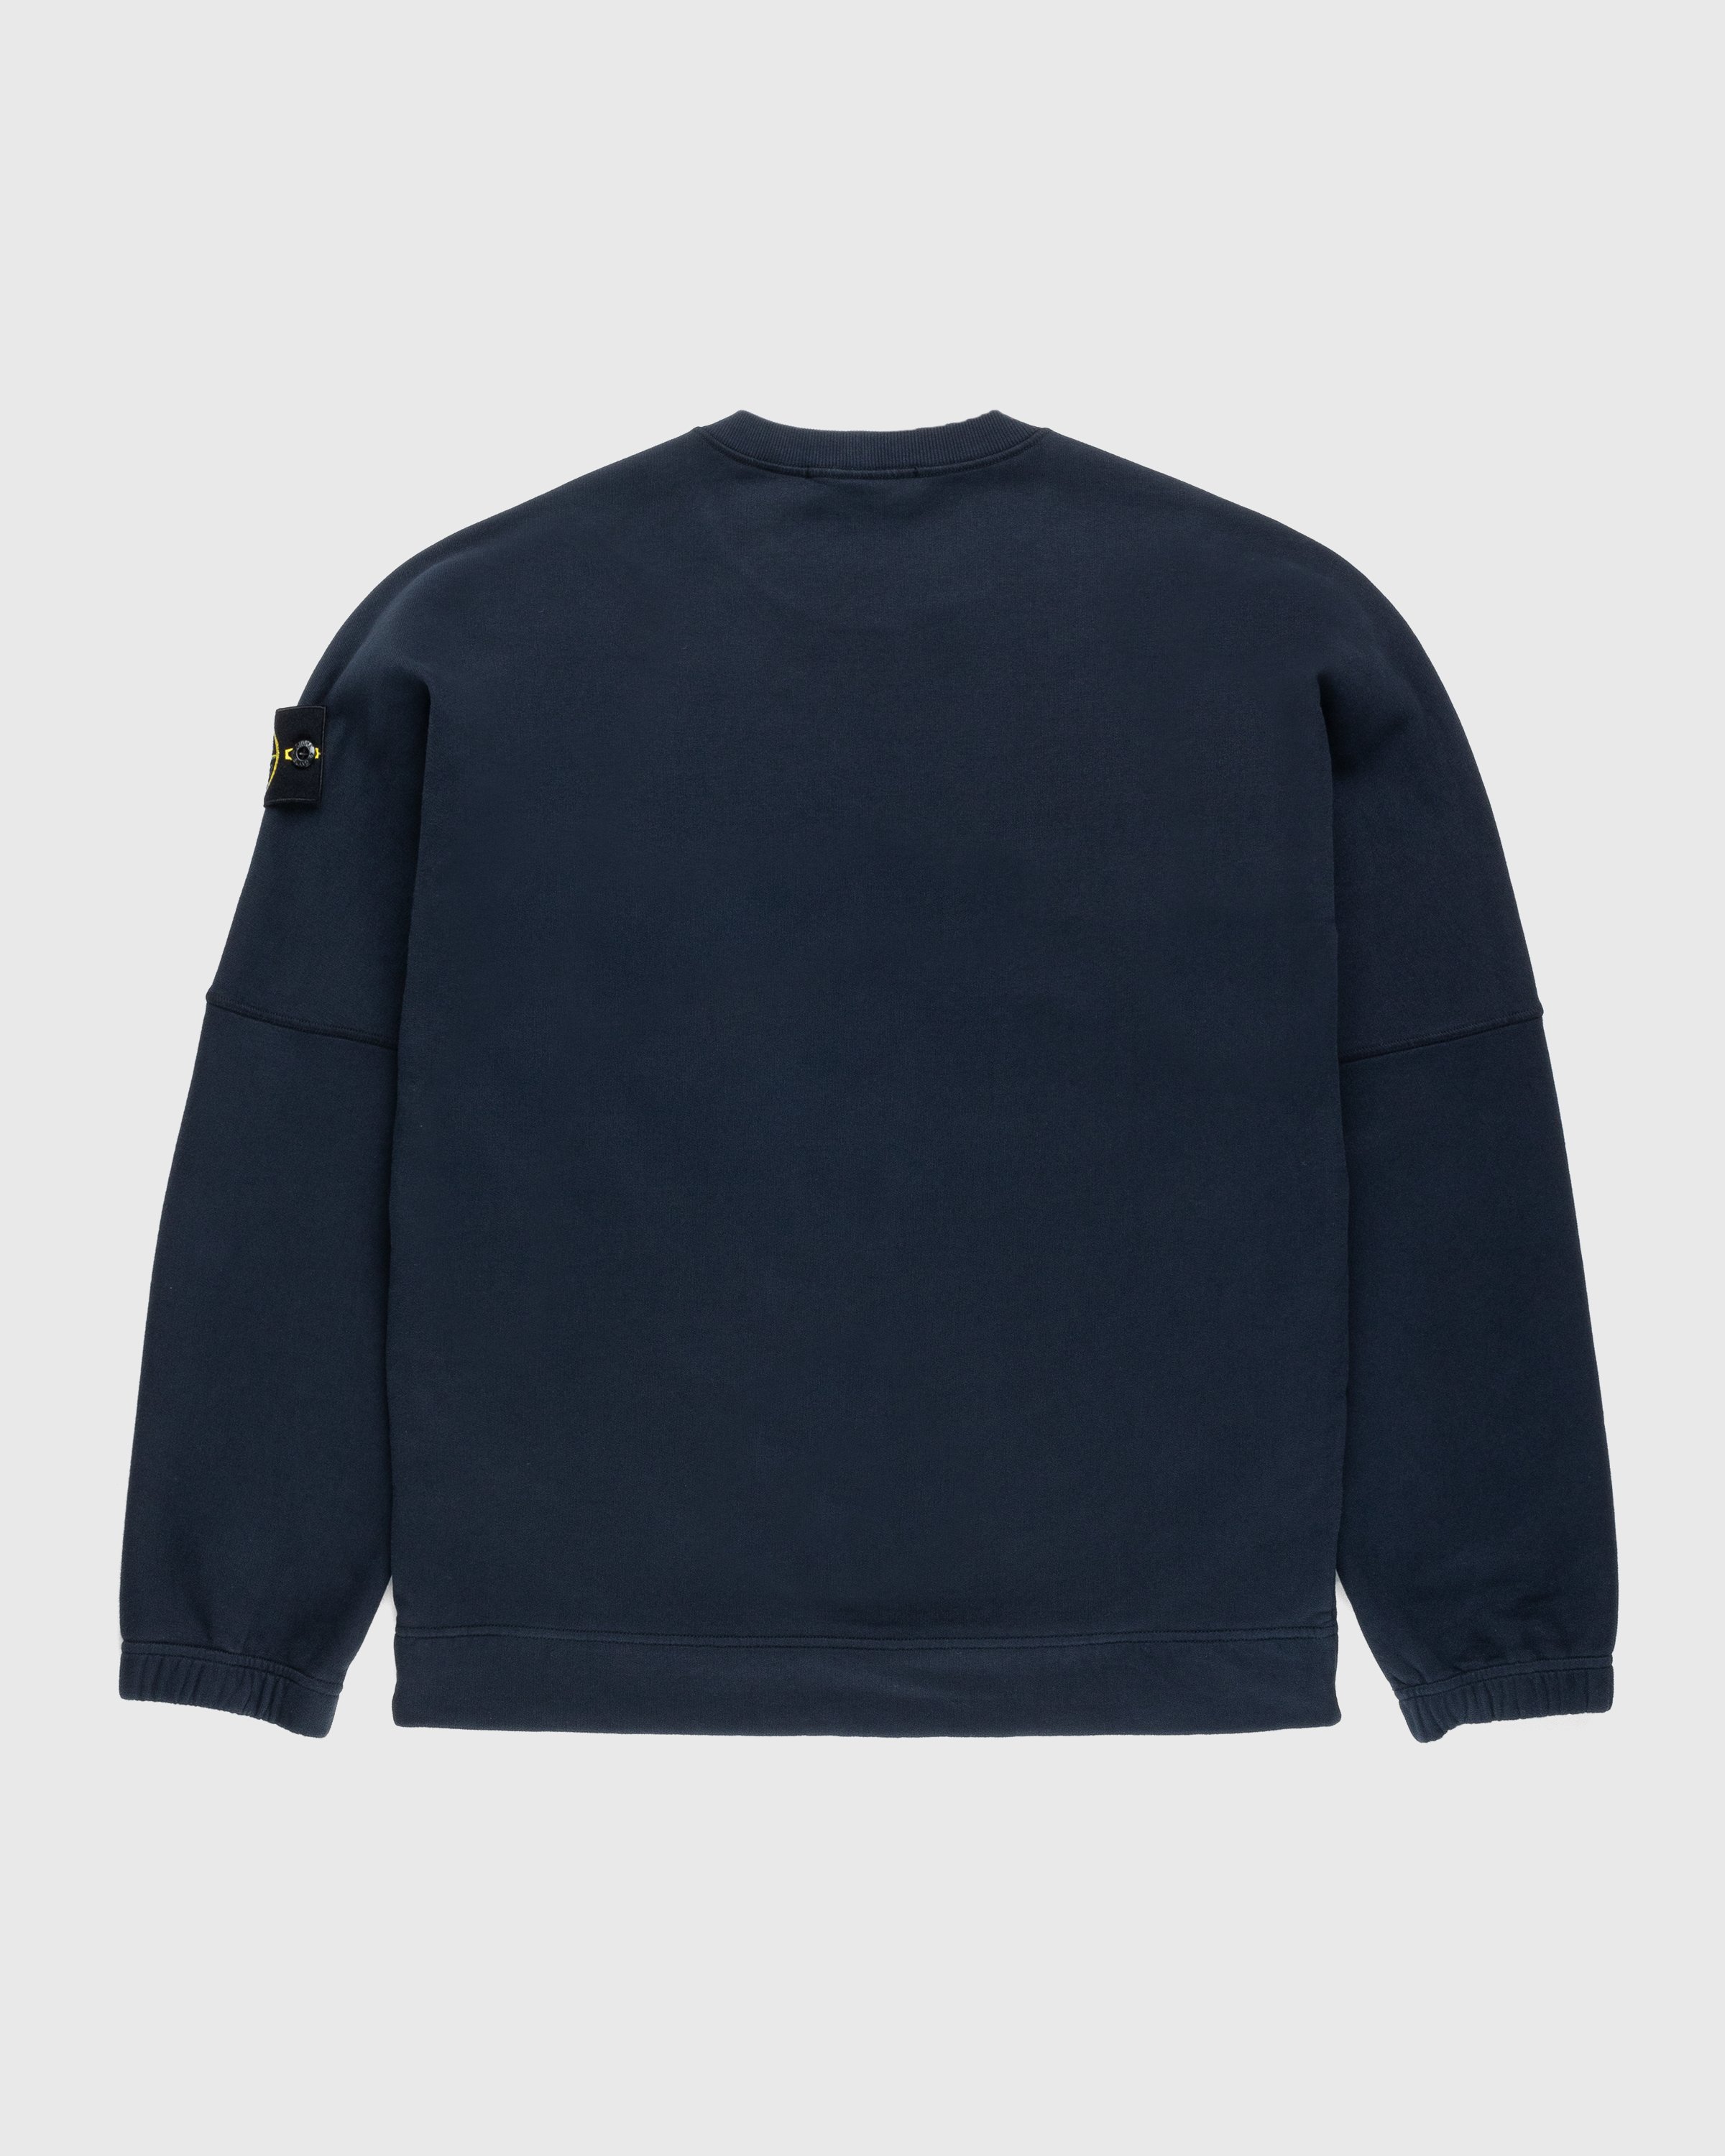 Stone Island - Garment-Dyed Fleece Crewneck Sweatshirt Navy Blue - Clothing - Blue - Image 2